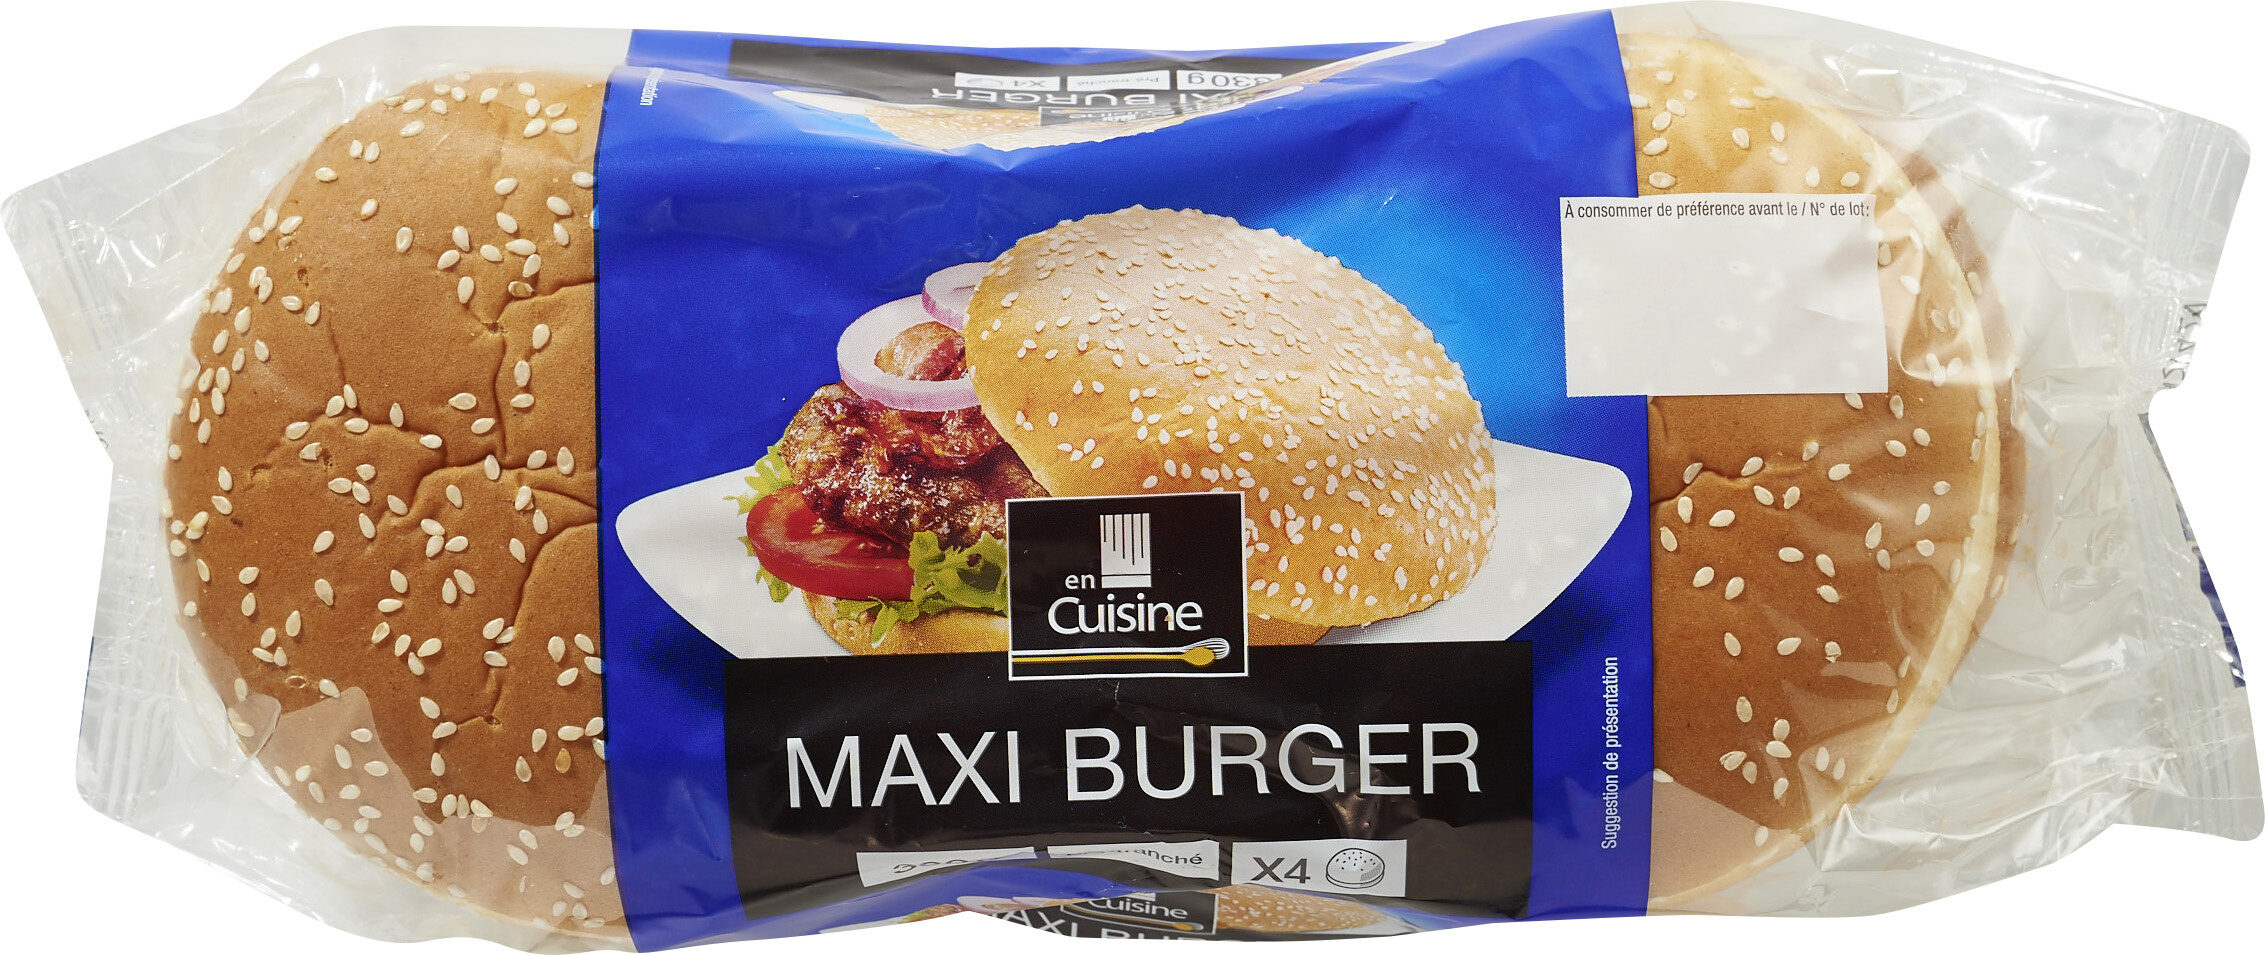 Maxi burger - Product - fr